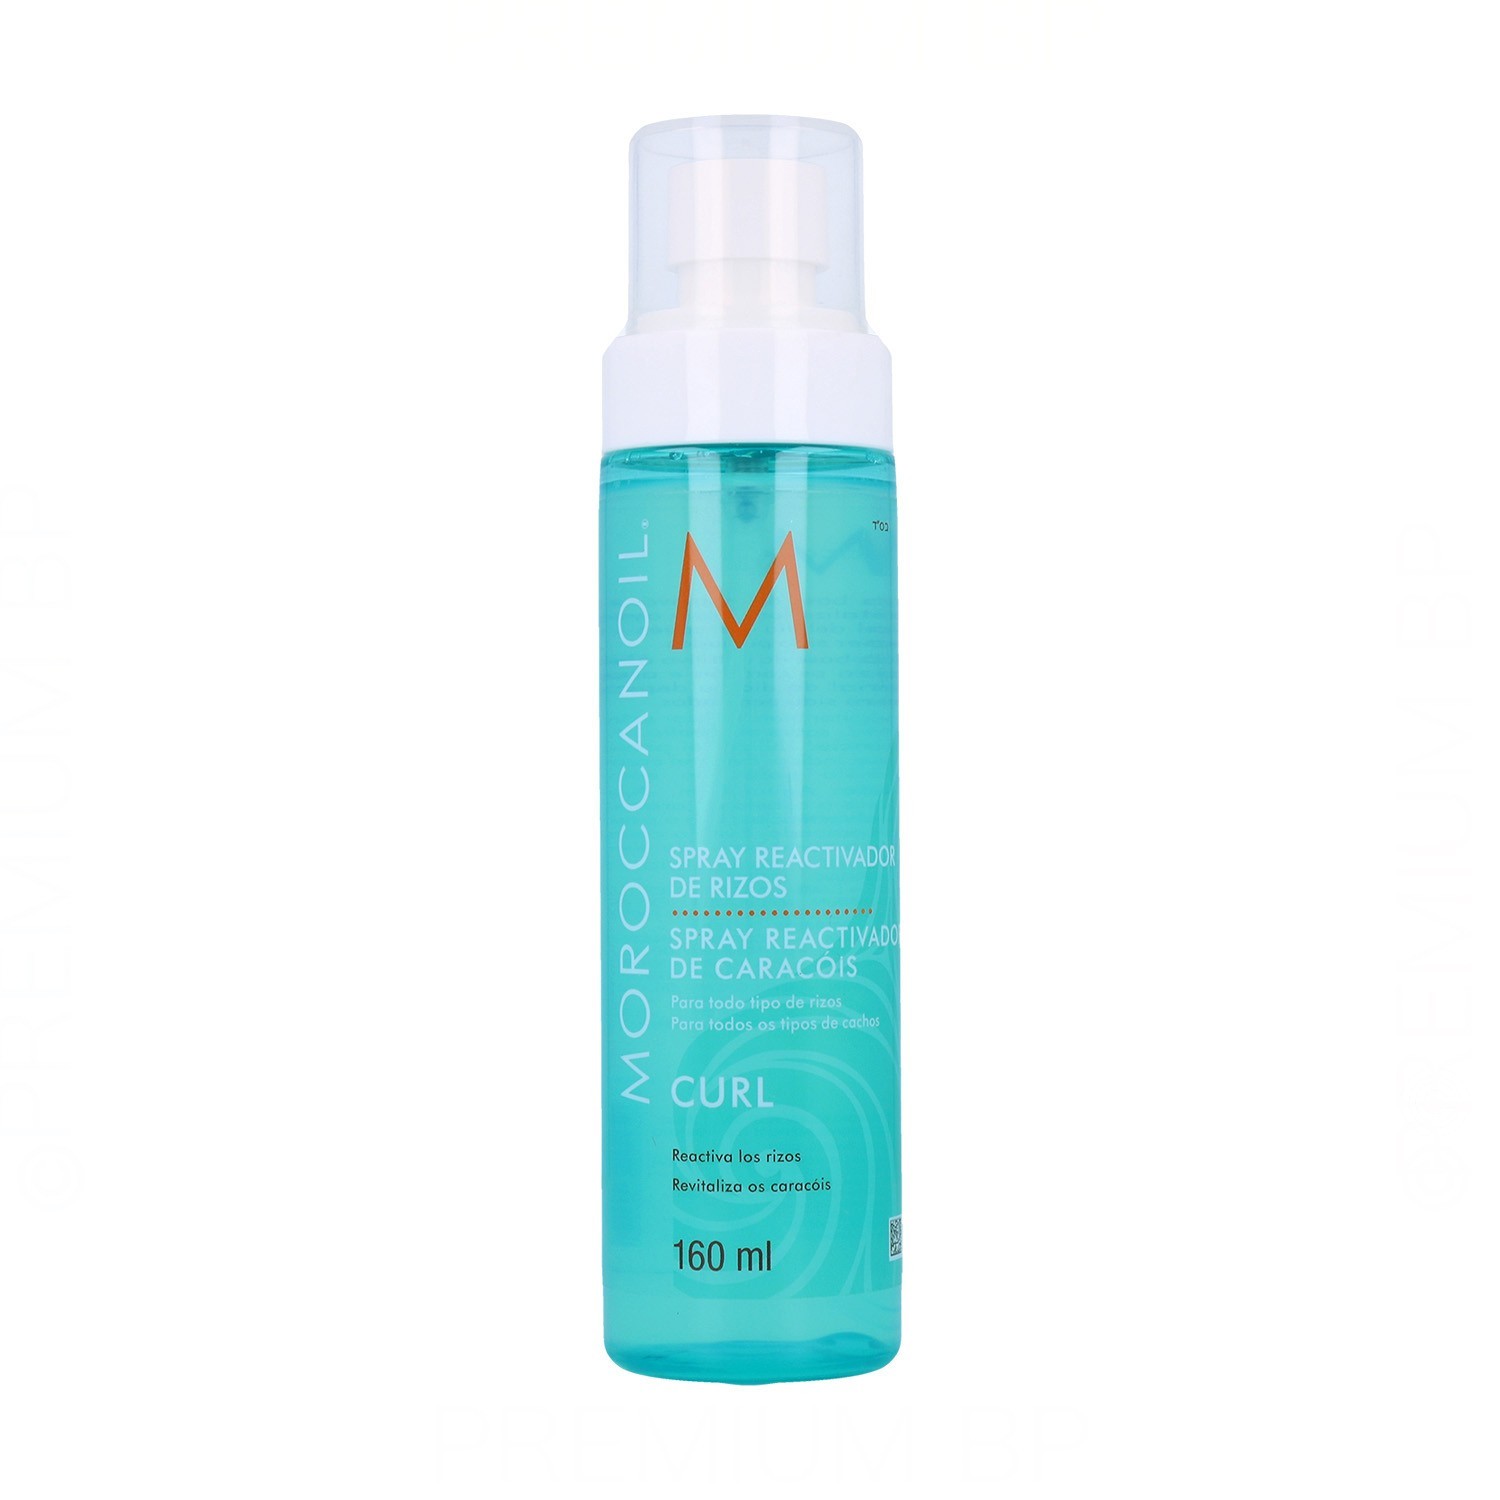 Moroccanoil Curl Spray Reactivator Curls 160 ml